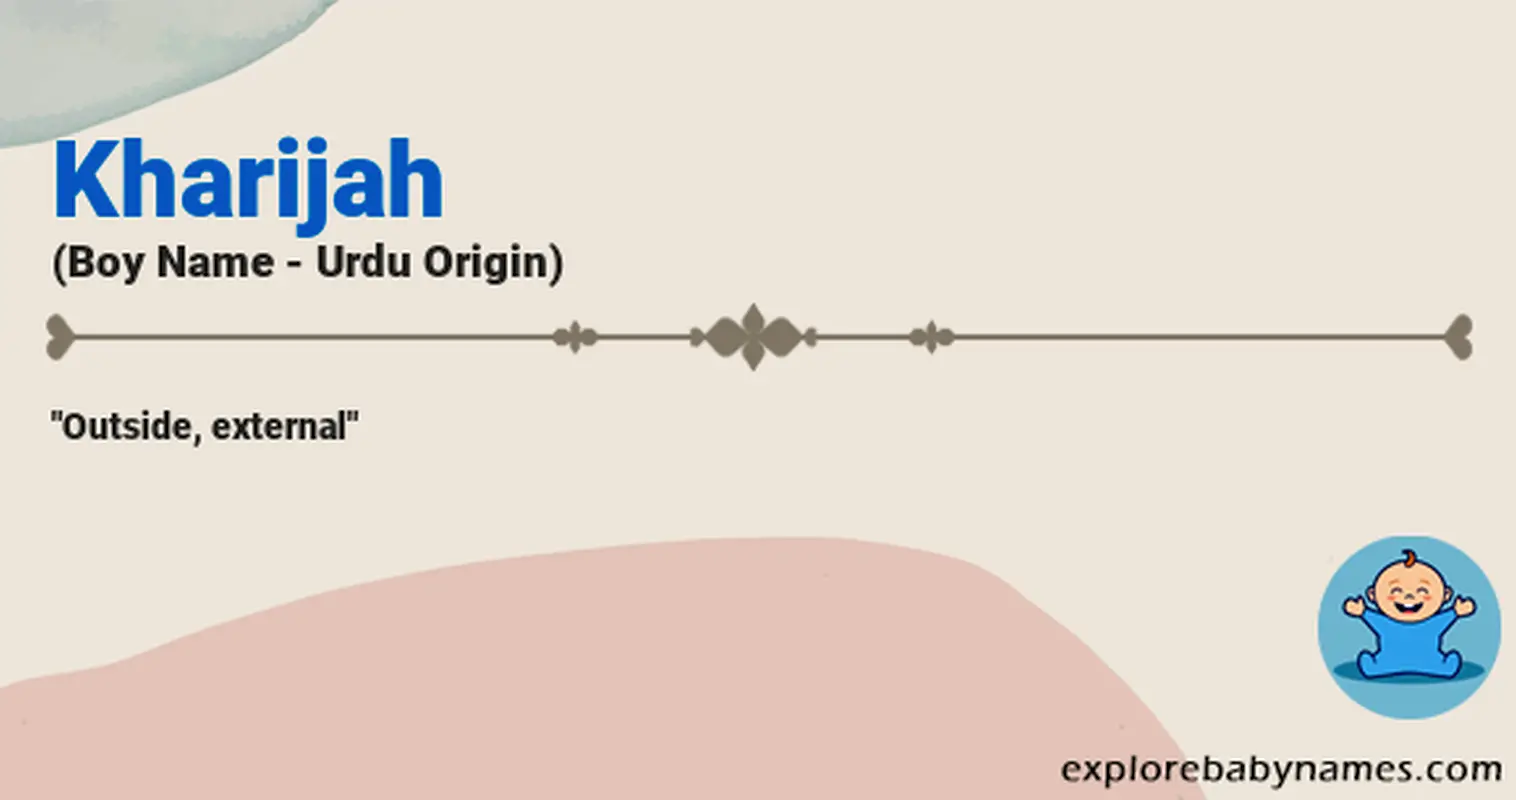 Meaning of Kharijah